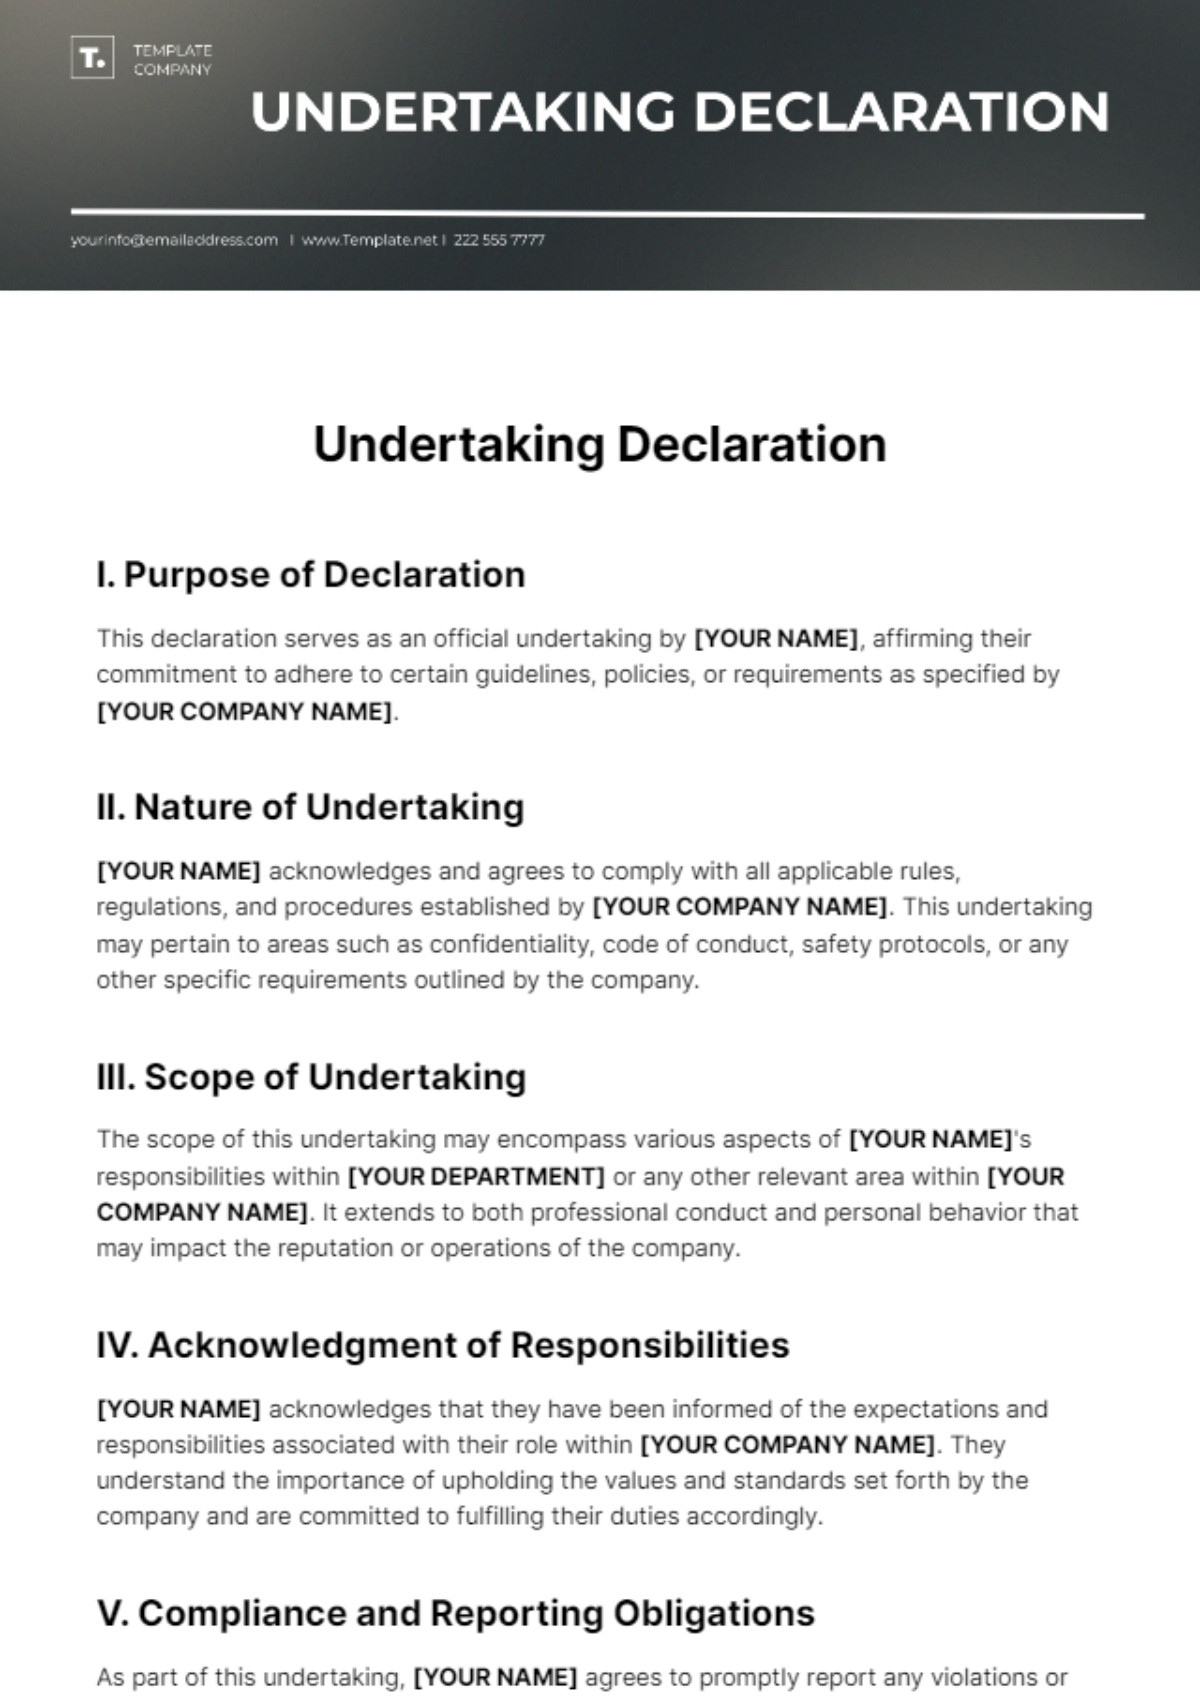 Free Undertaking Declaration Template